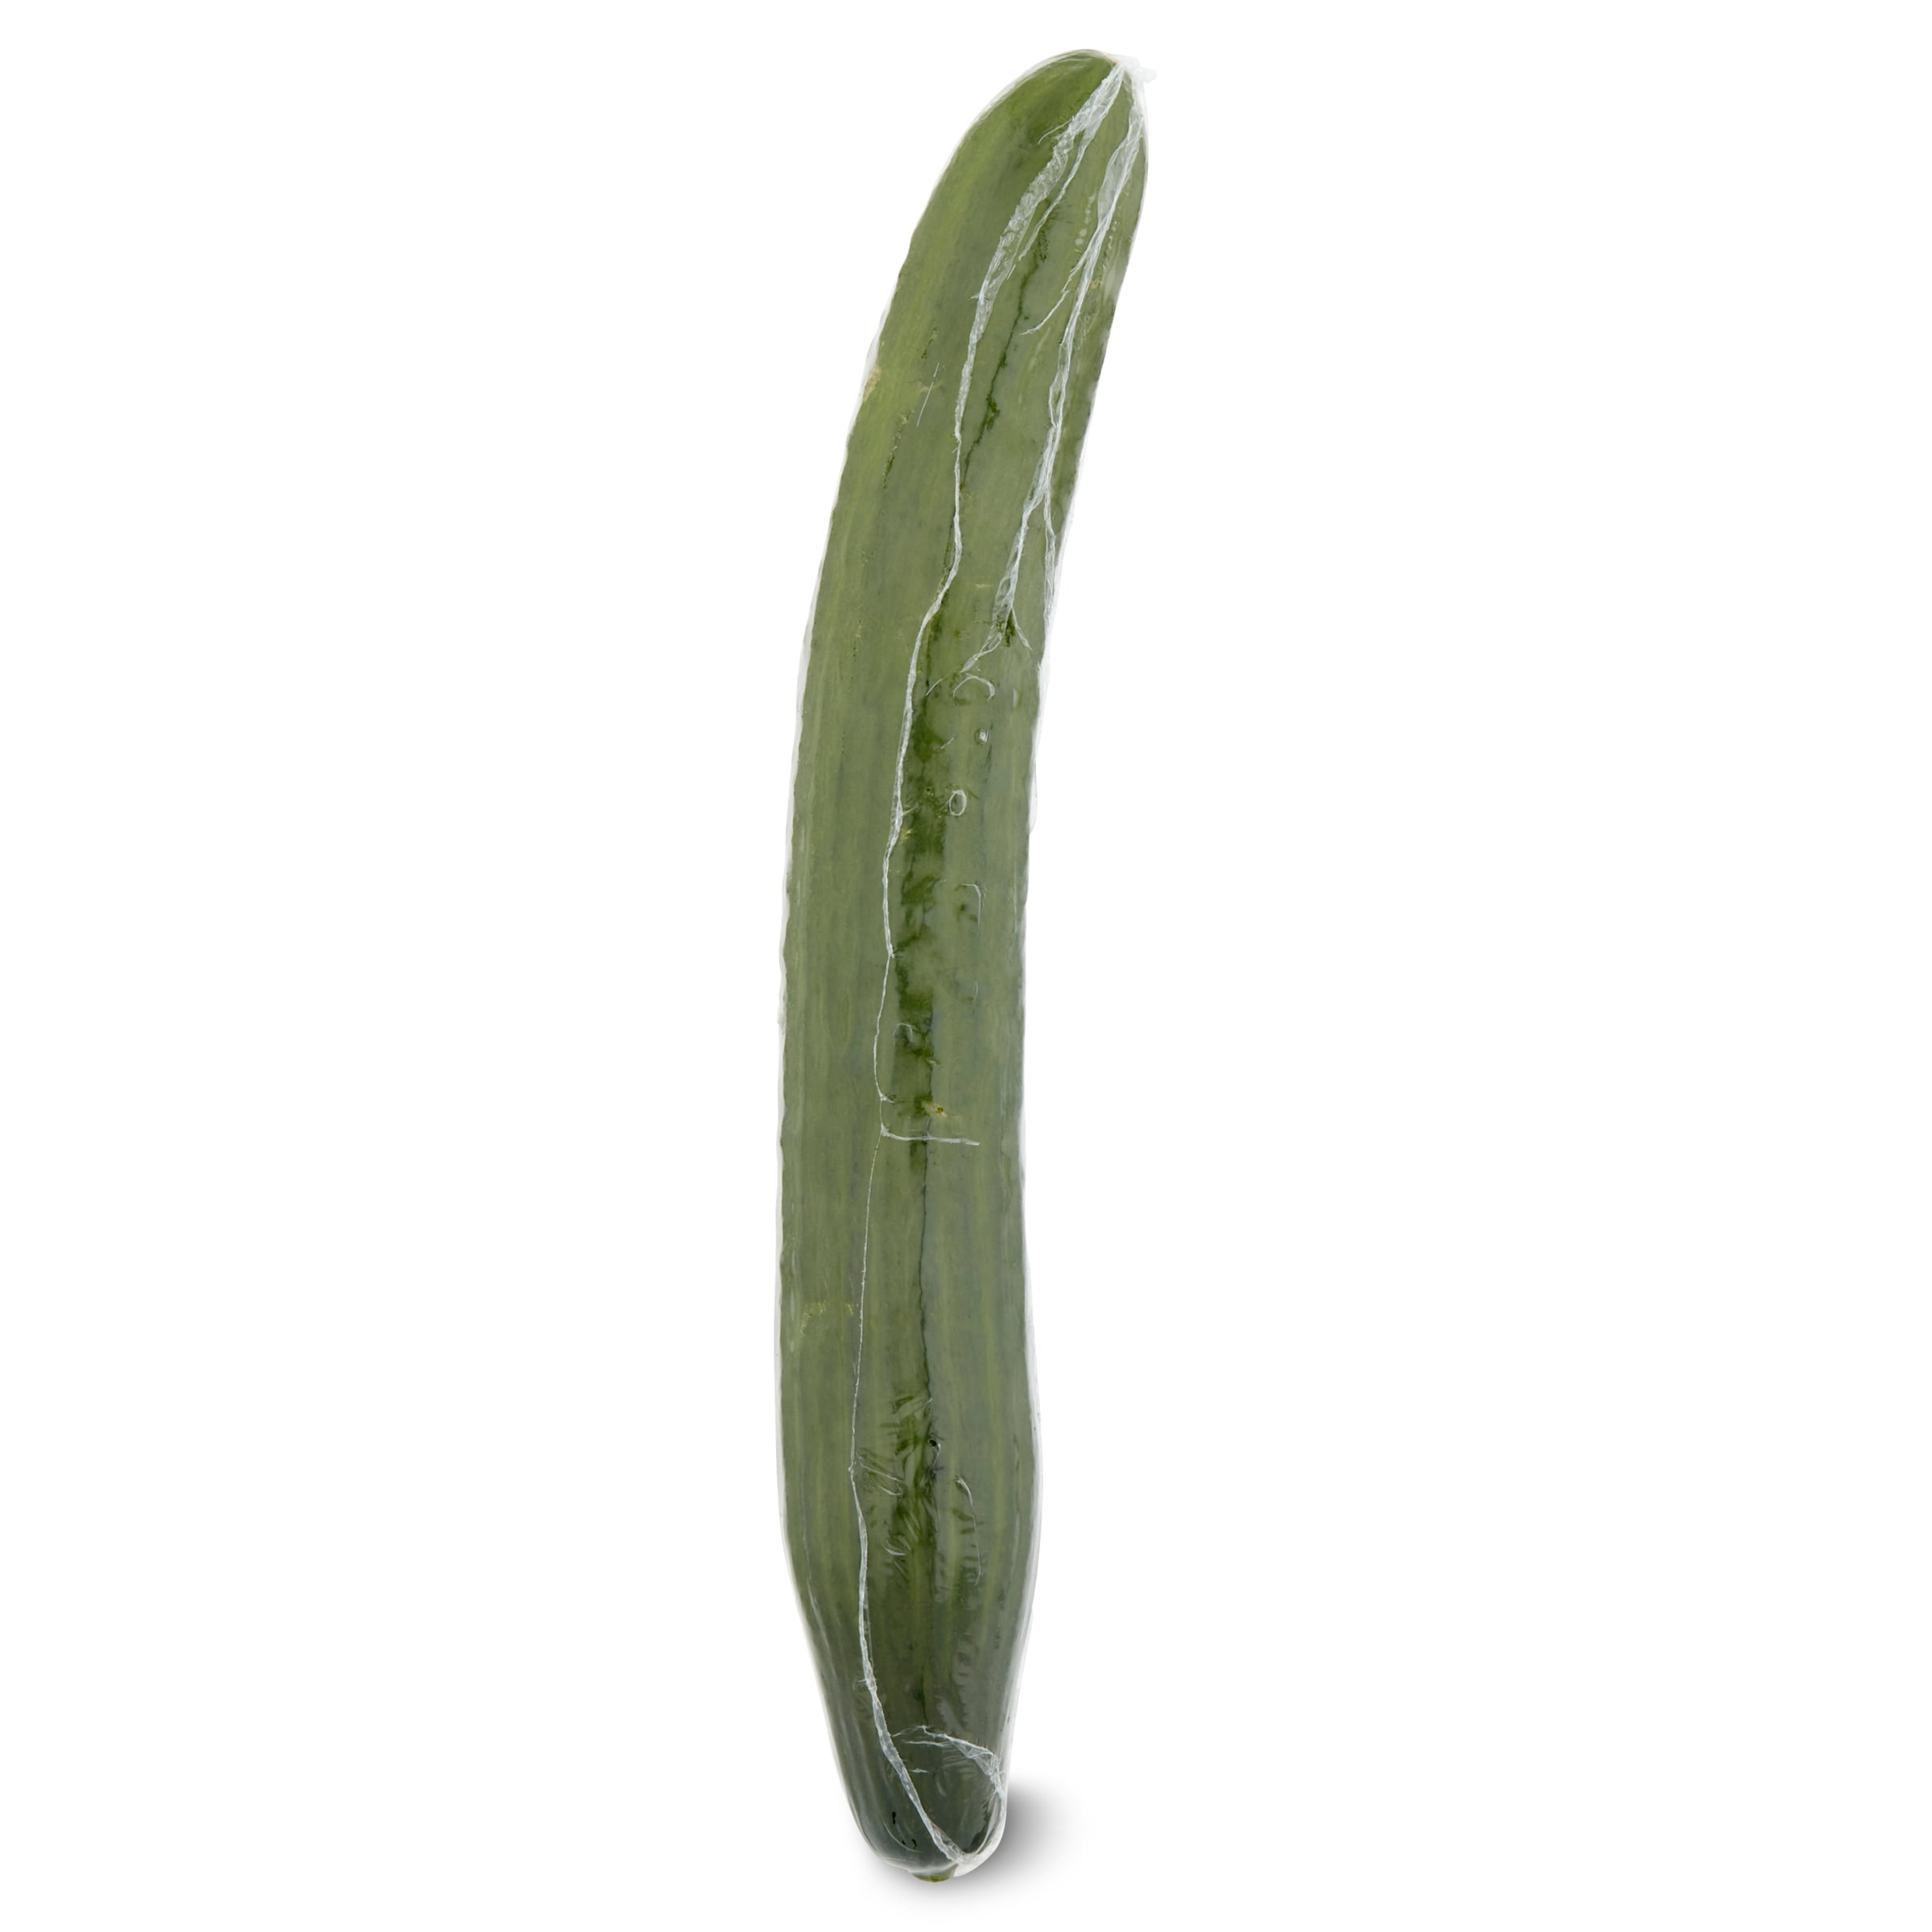 Nature Fresh Organic Mini Cucumbers (6 ct)